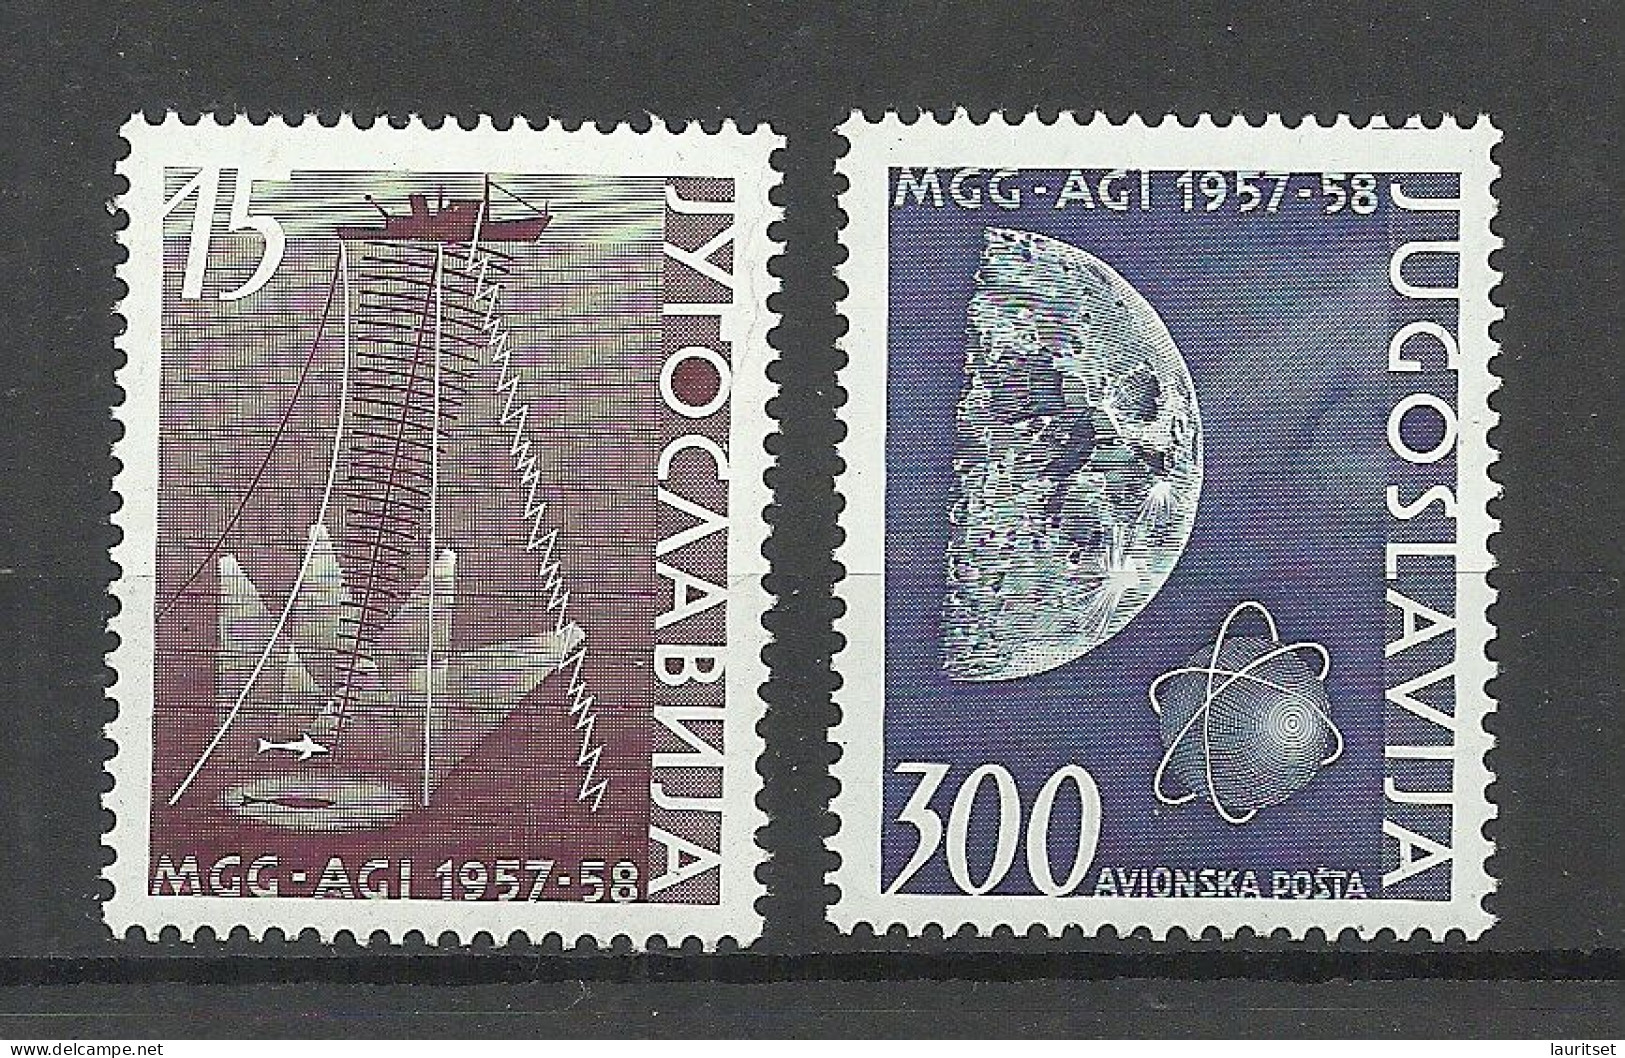 JUGOSLAVIA Jugoslawien 1958 Michel 868 - 869 MNH - Unused Stamps